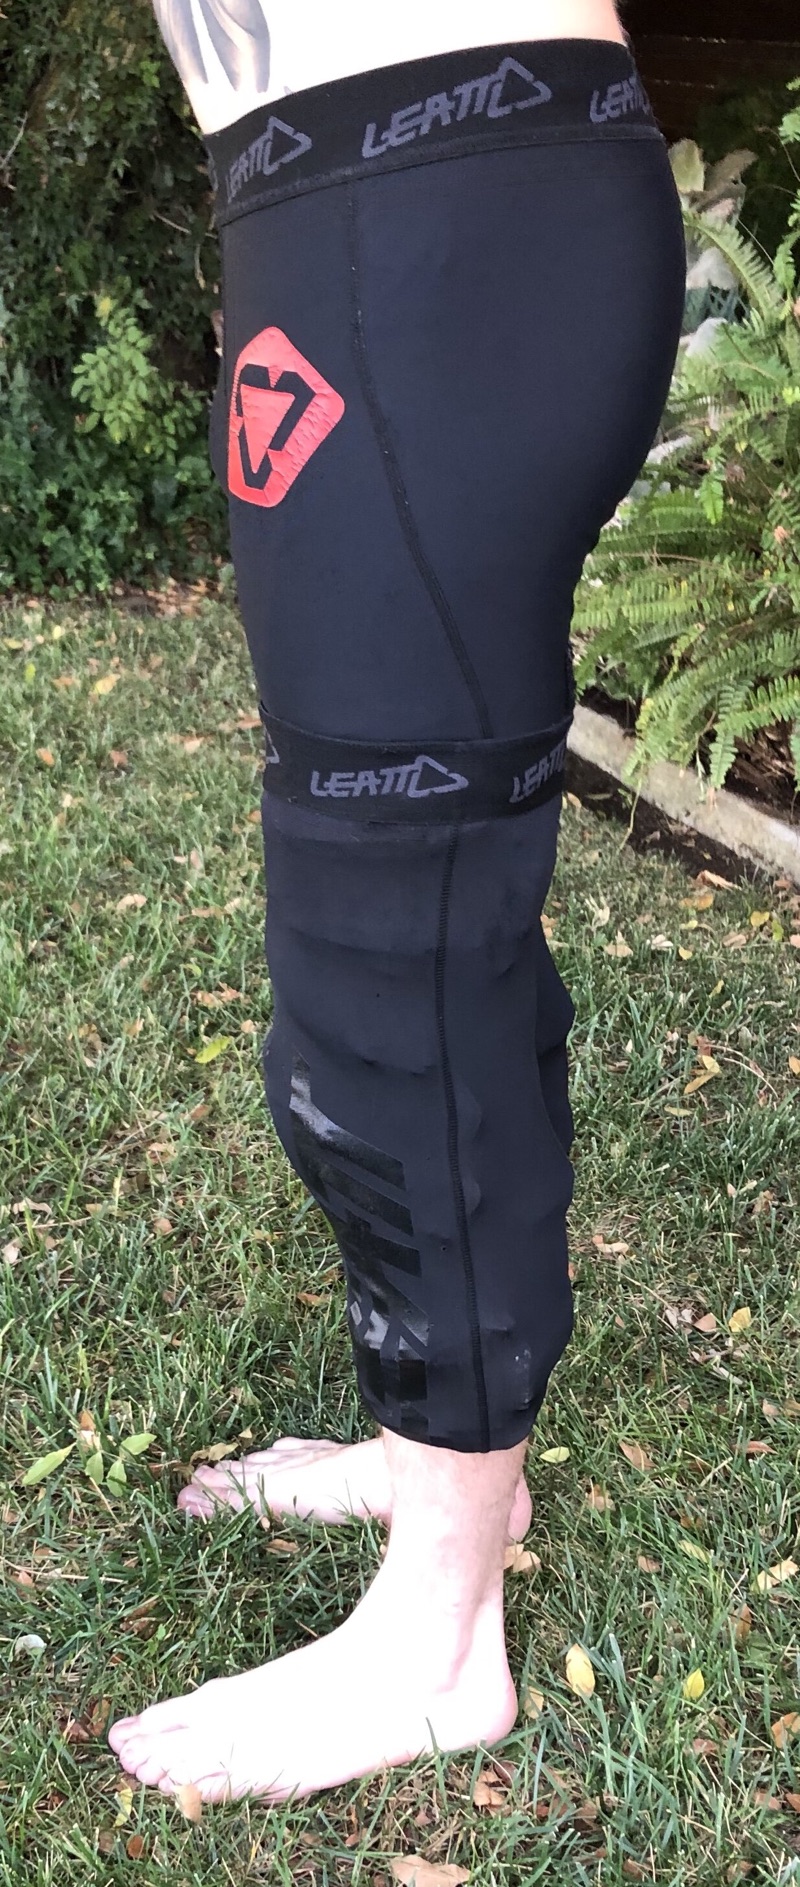 On My Own Dime (Leatt Knee Brace Pant) - Keefer, Inc. Tested